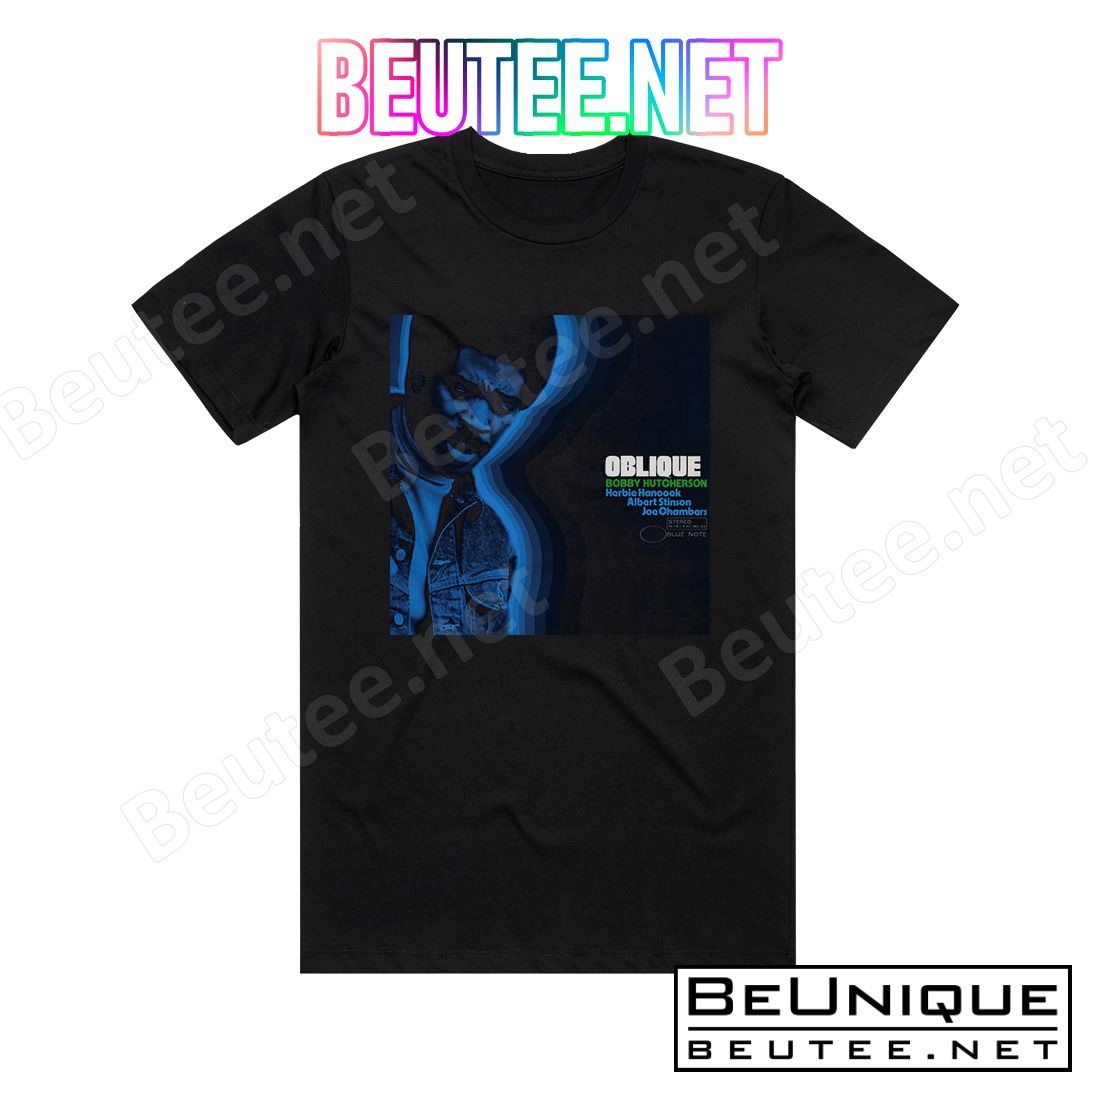 Bobby Hutcherson Oblique 1 Album Cover T-Shirt